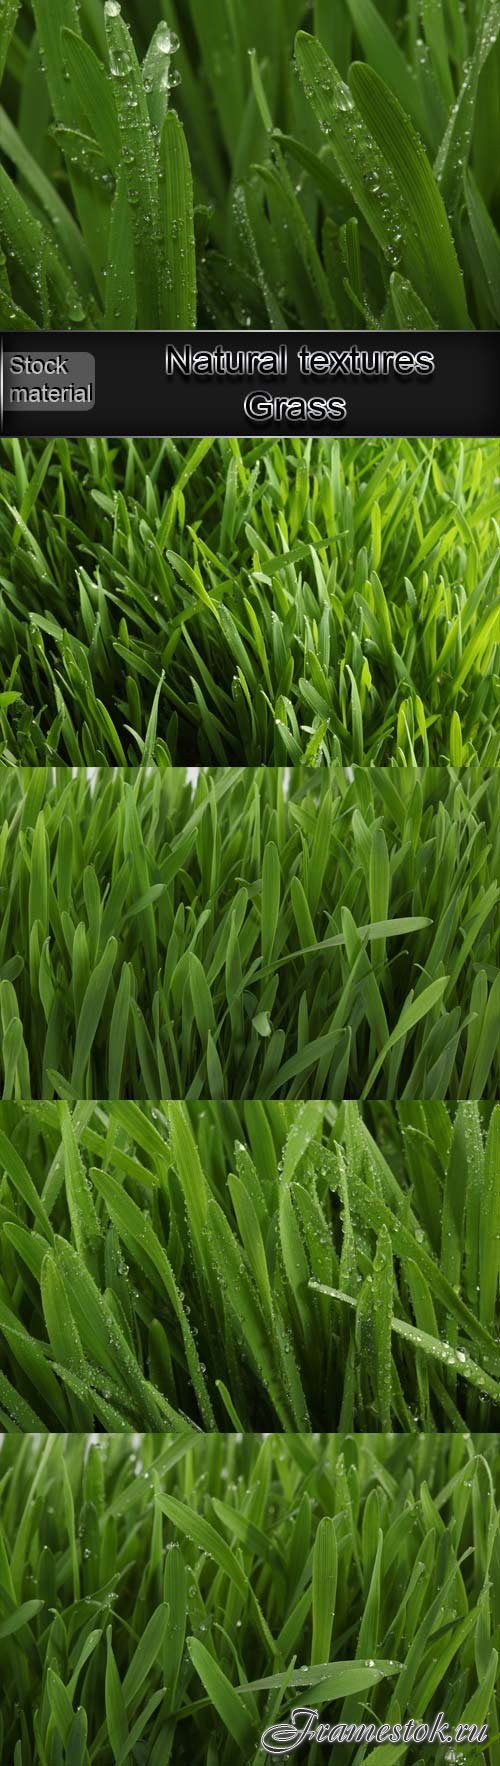 Natural textures. Grass